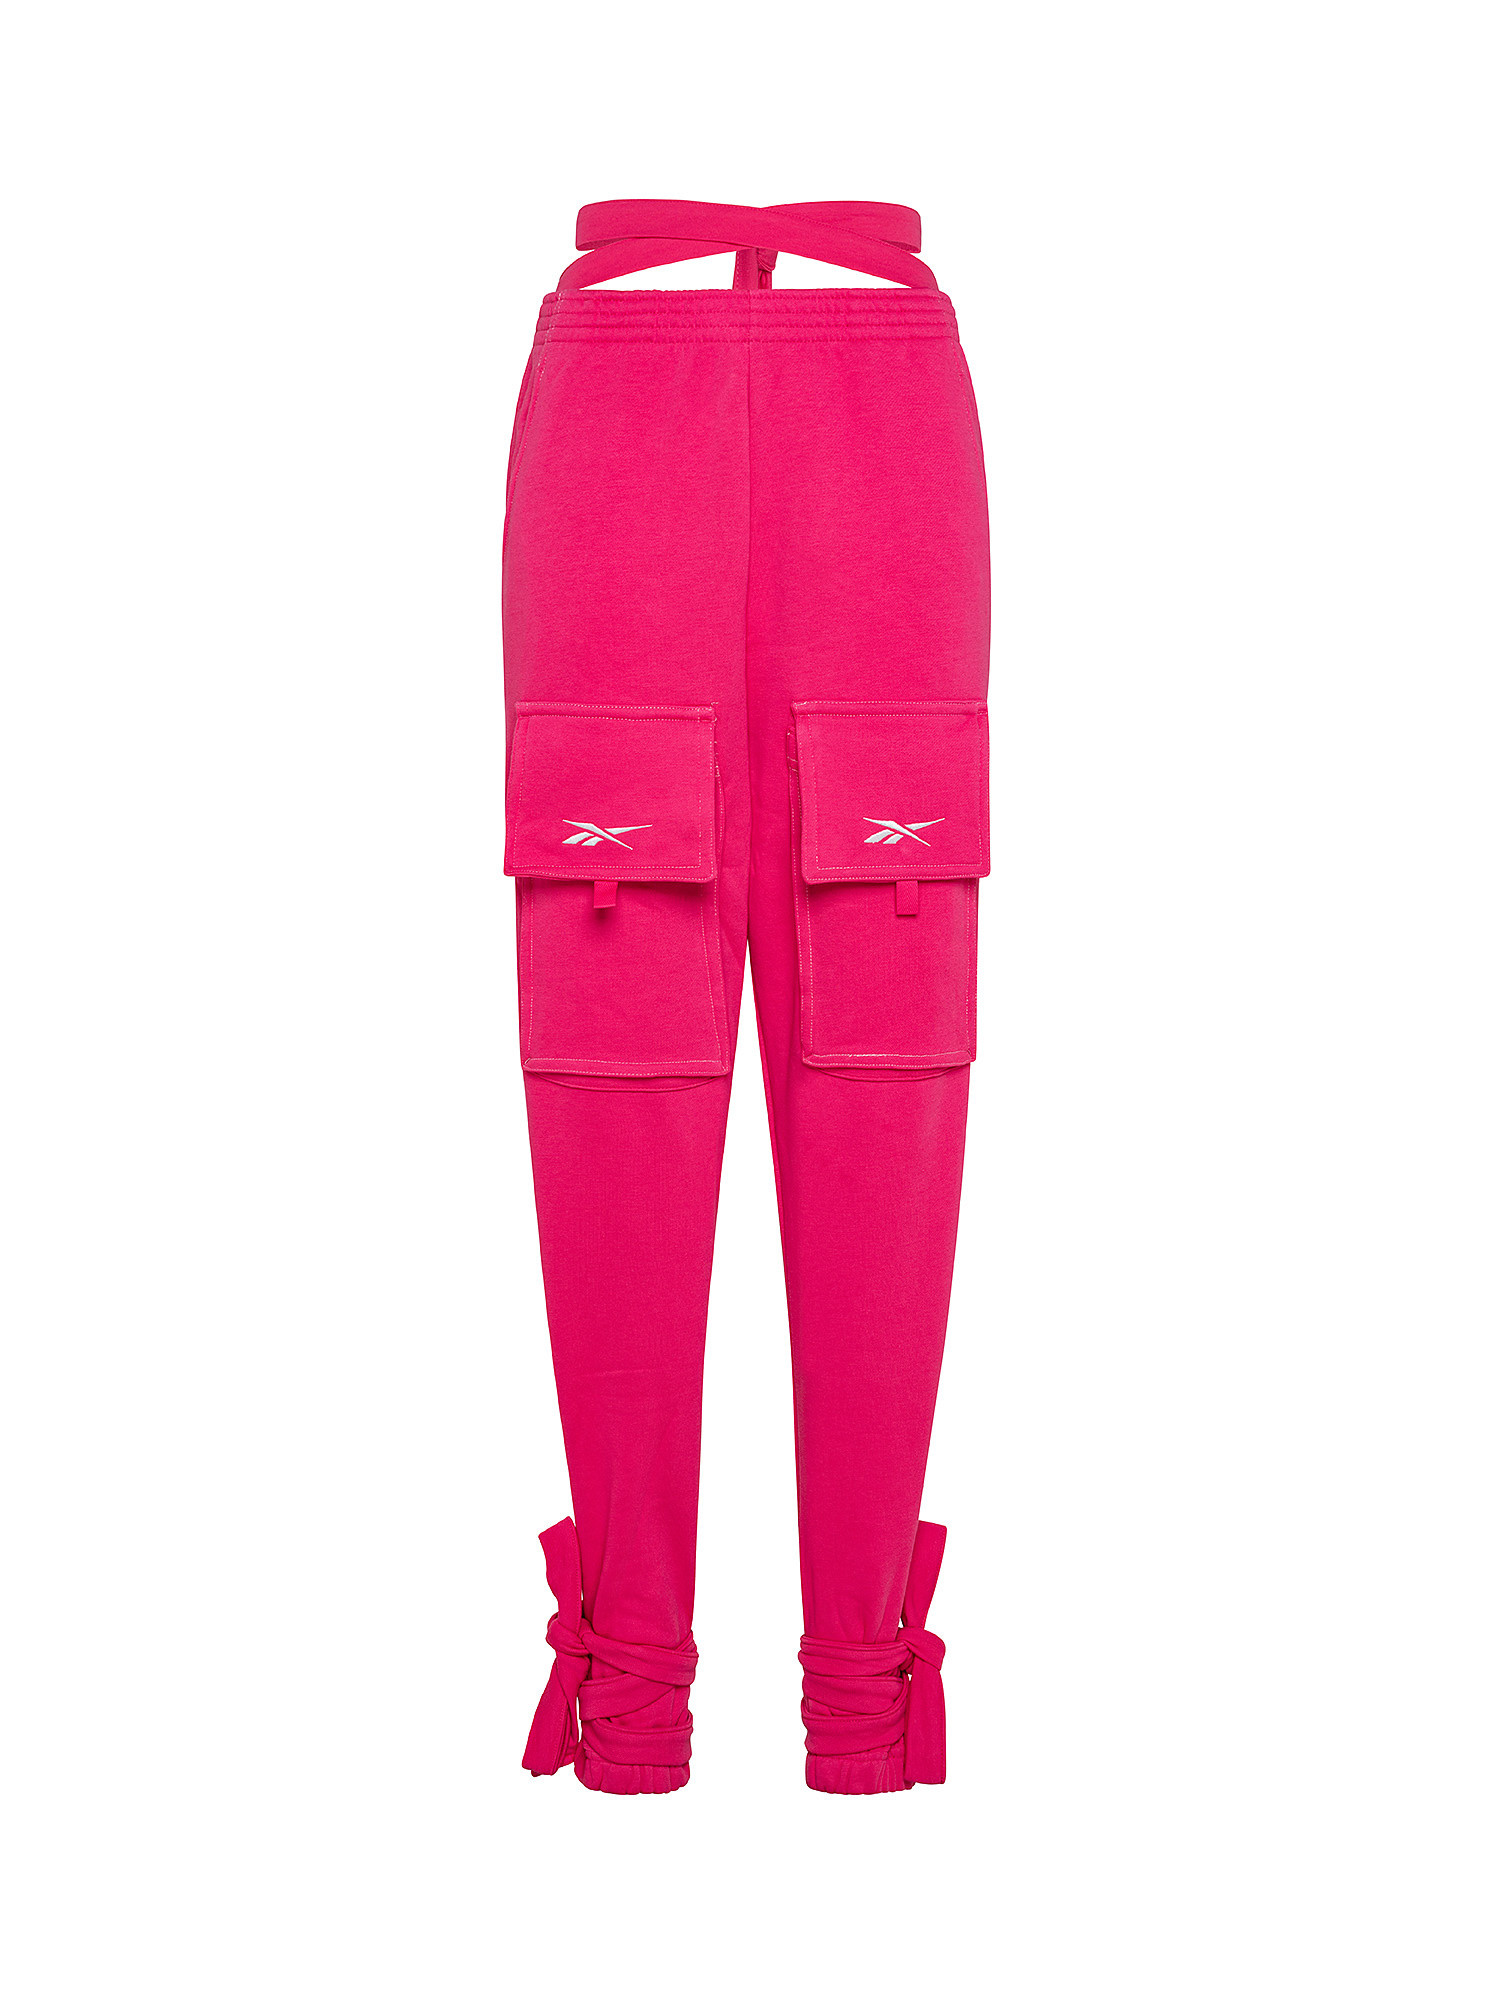 Cardi B Knit Pants, Pink Fuchsia, large image number 0